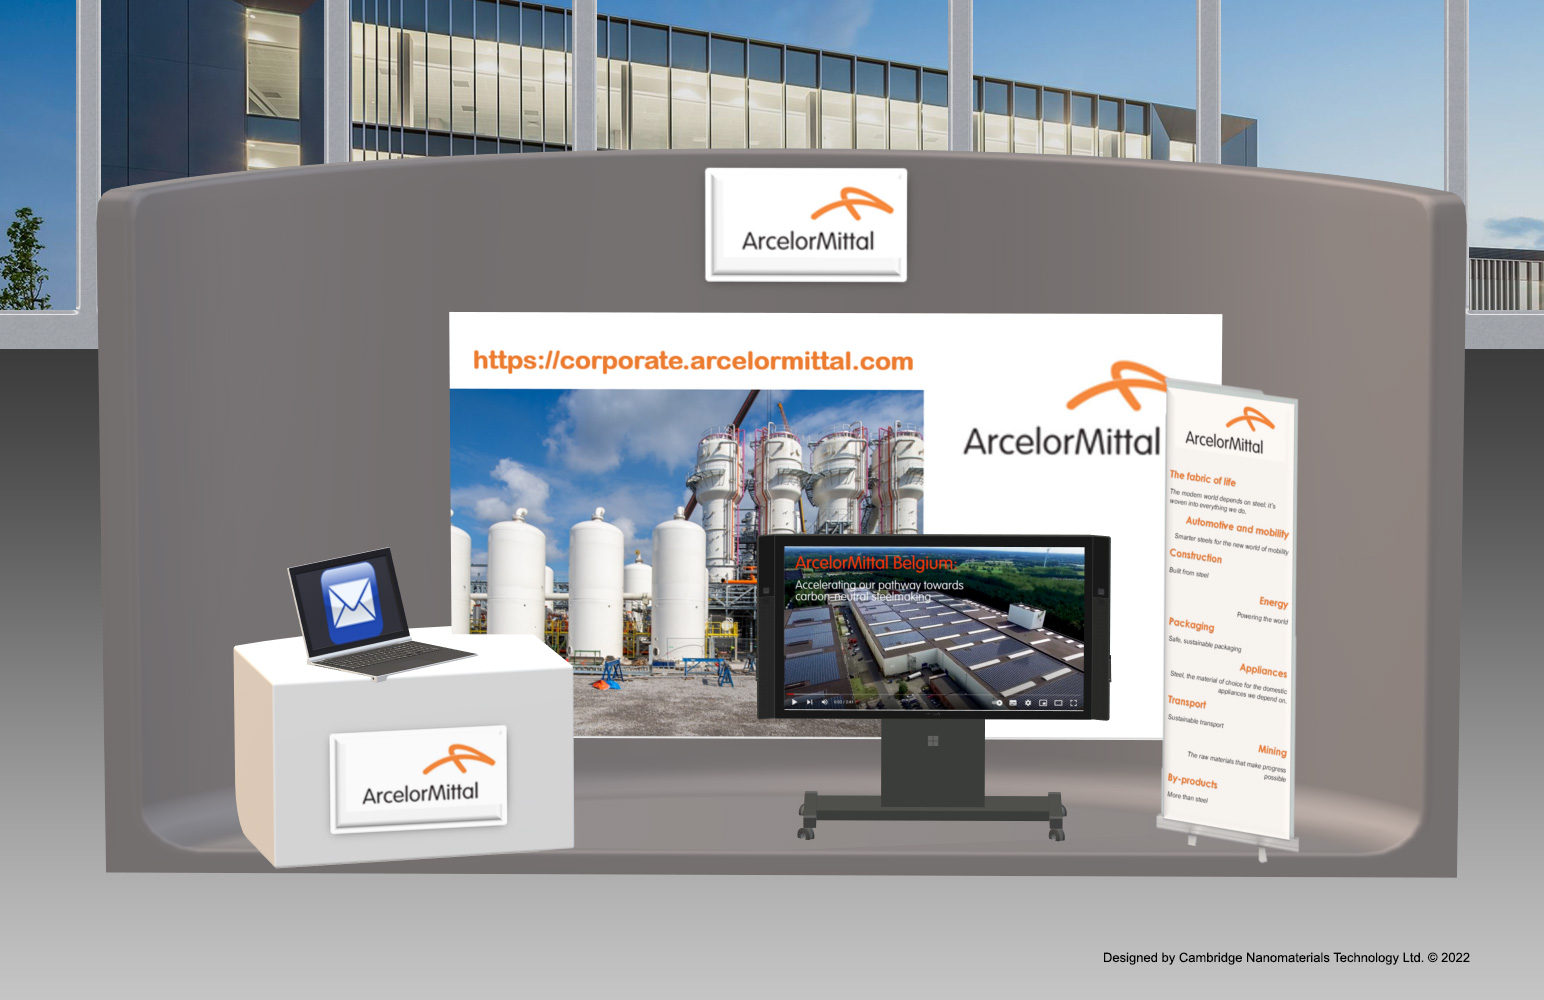 ArcelorMittal Group CTO – Belgium